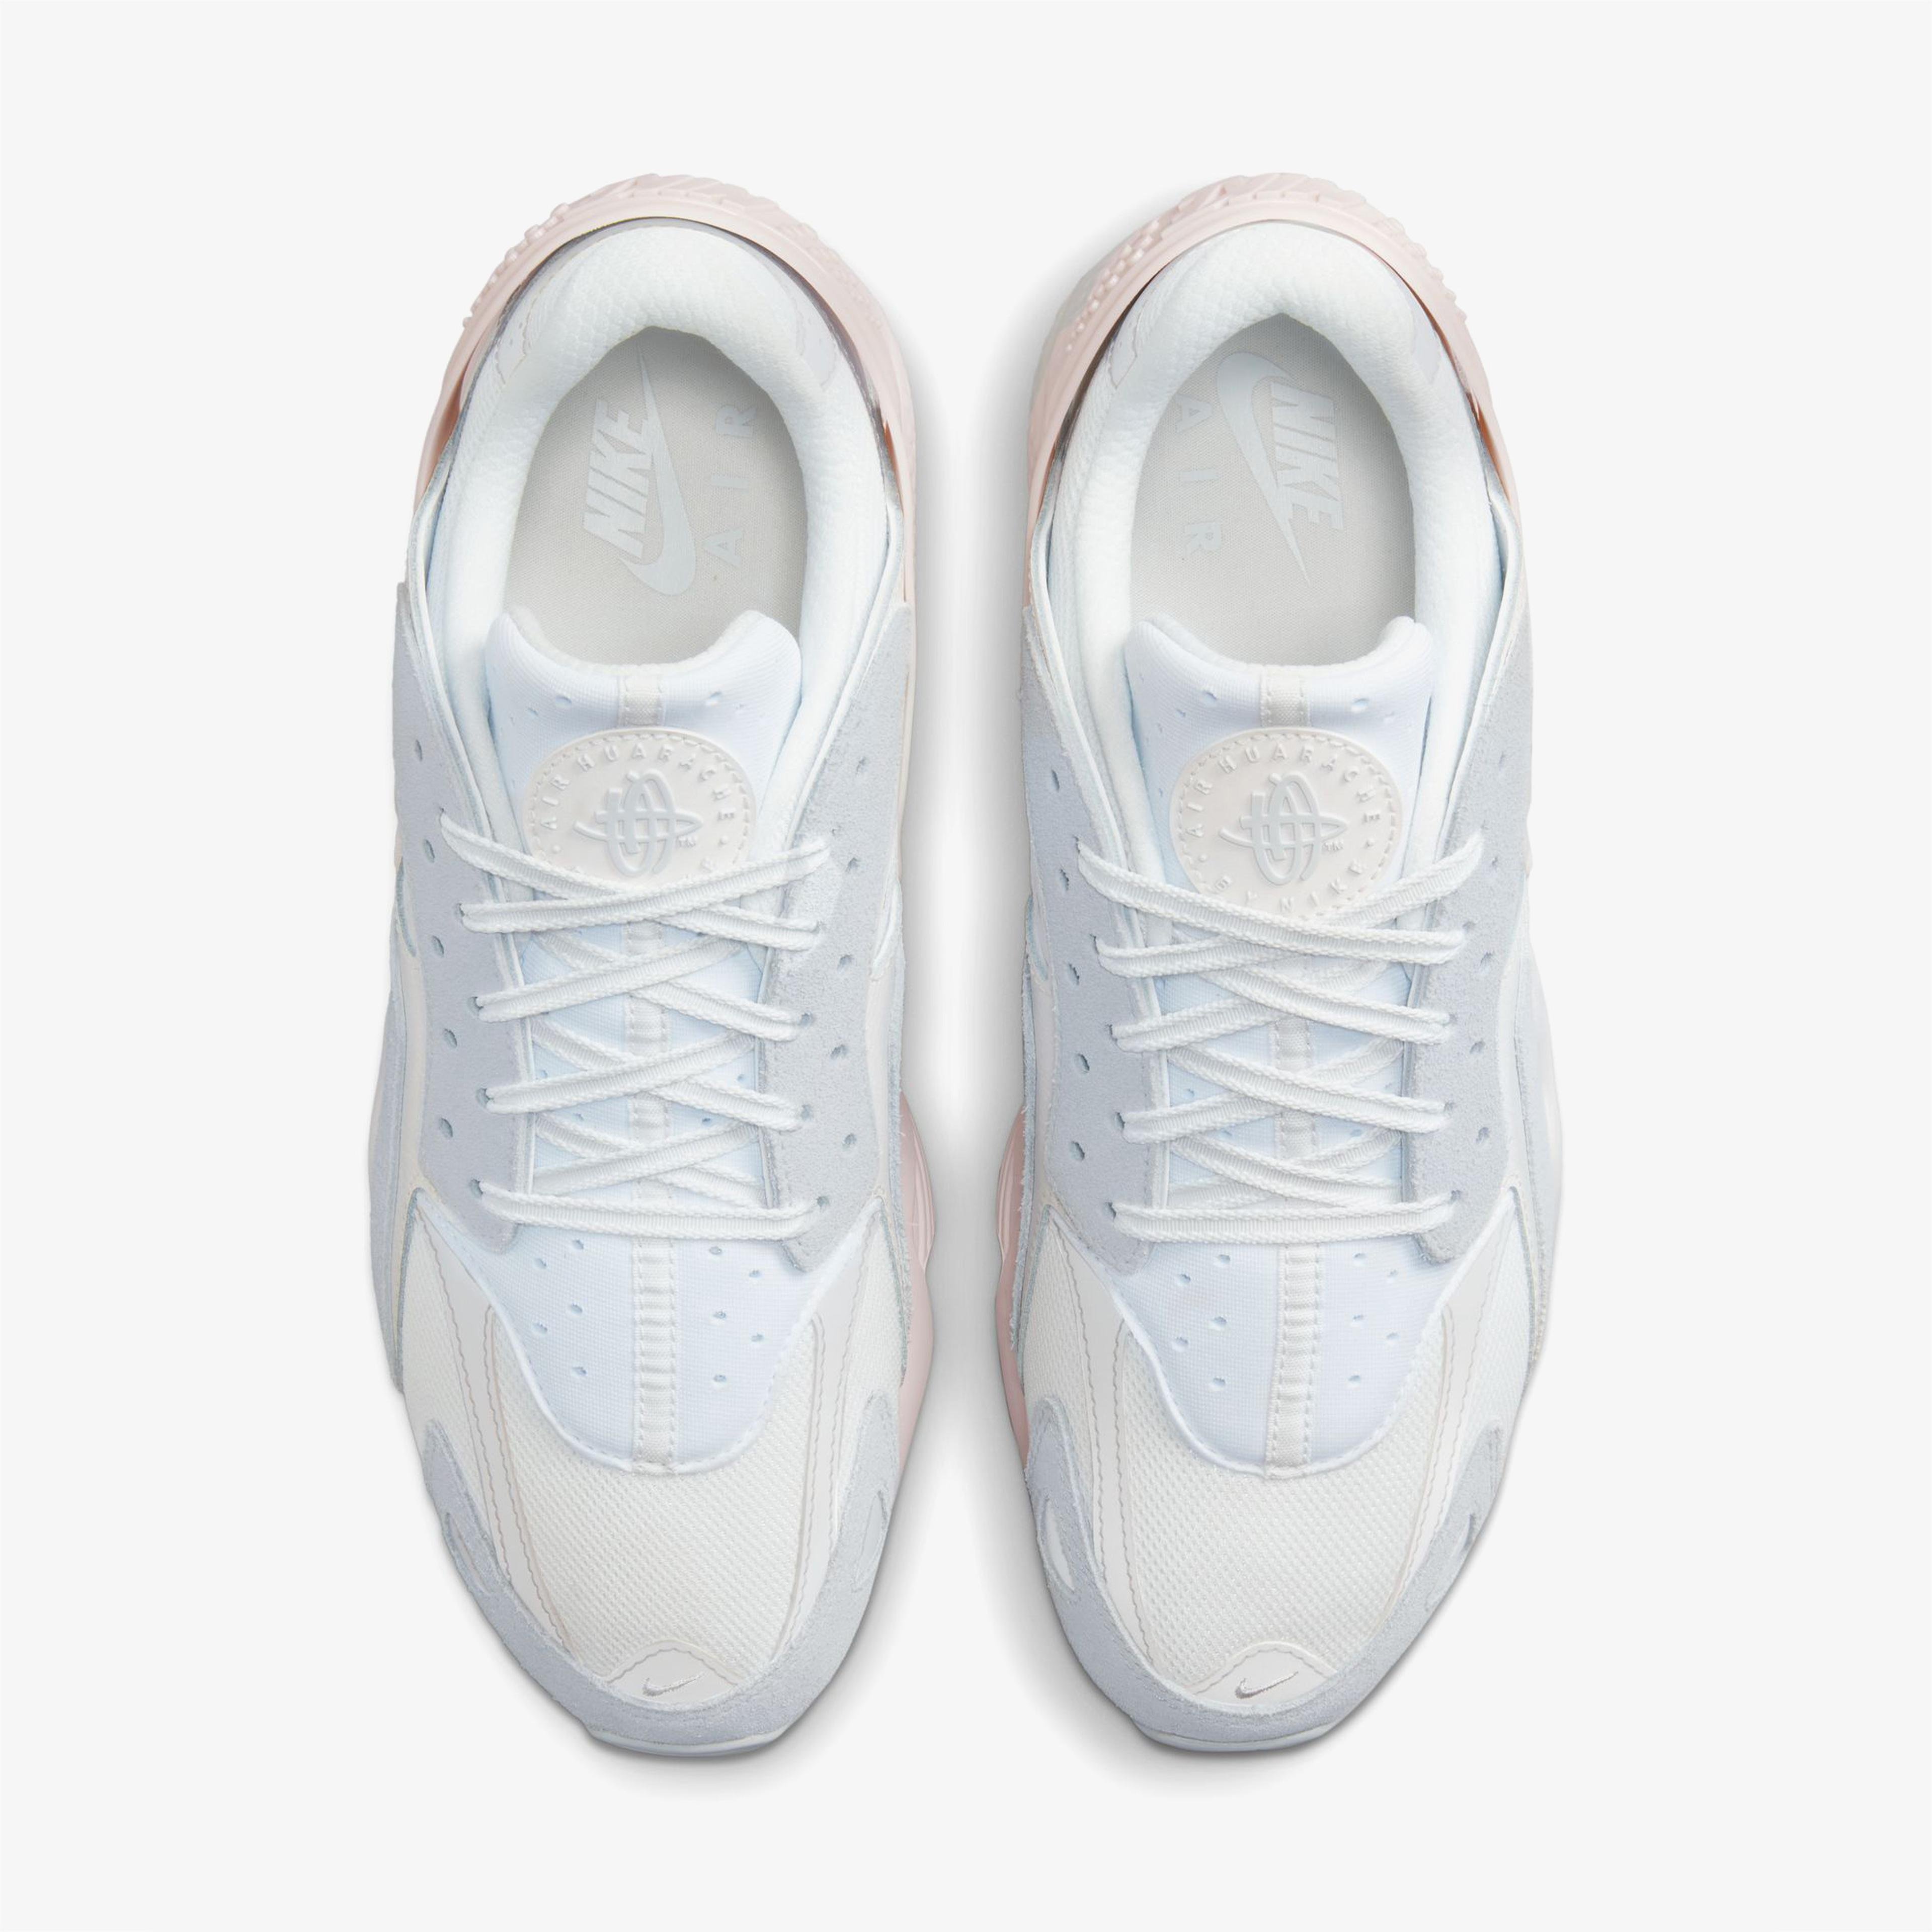 Nike Air Huarache Runner Erkek Beyaz Spor Ayakkabı